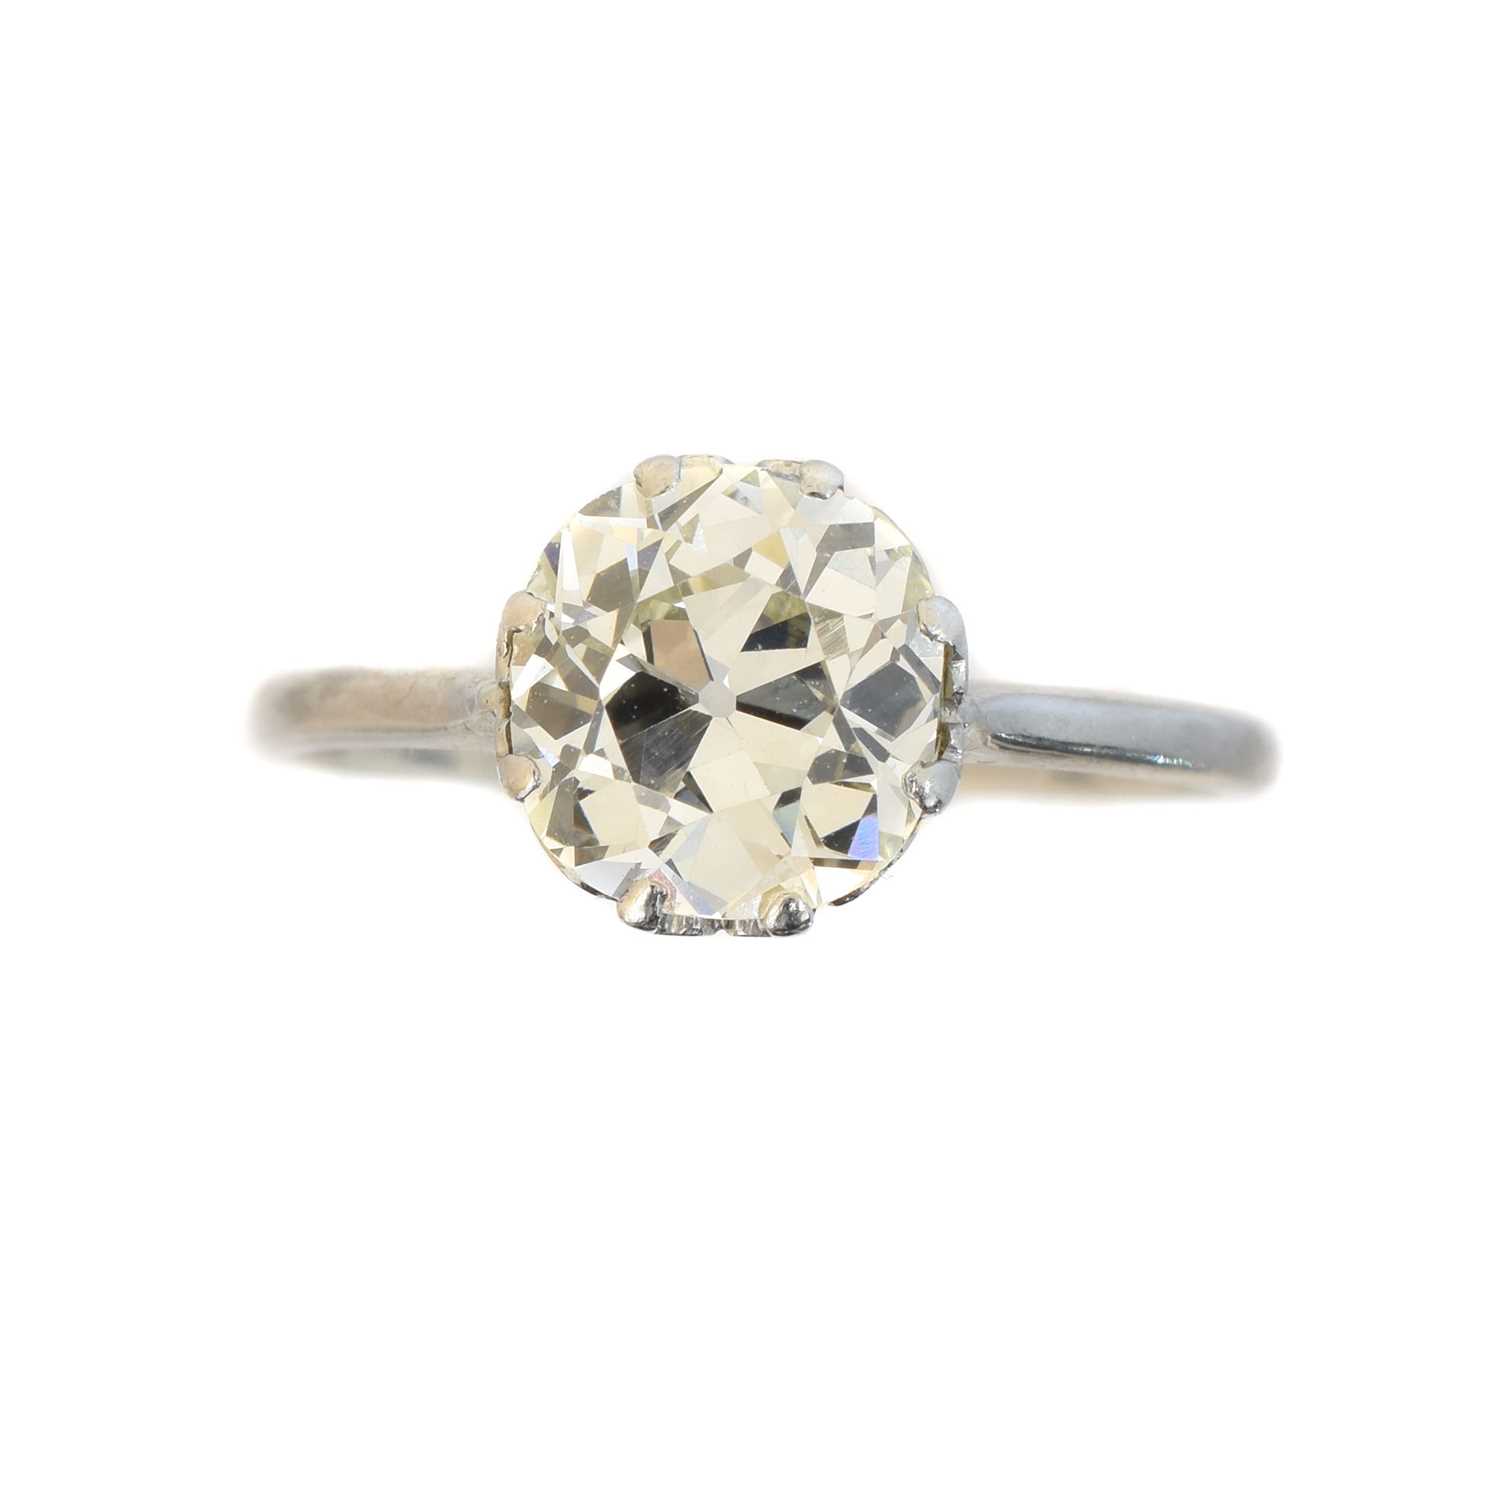 Lot A diamond single stone ring